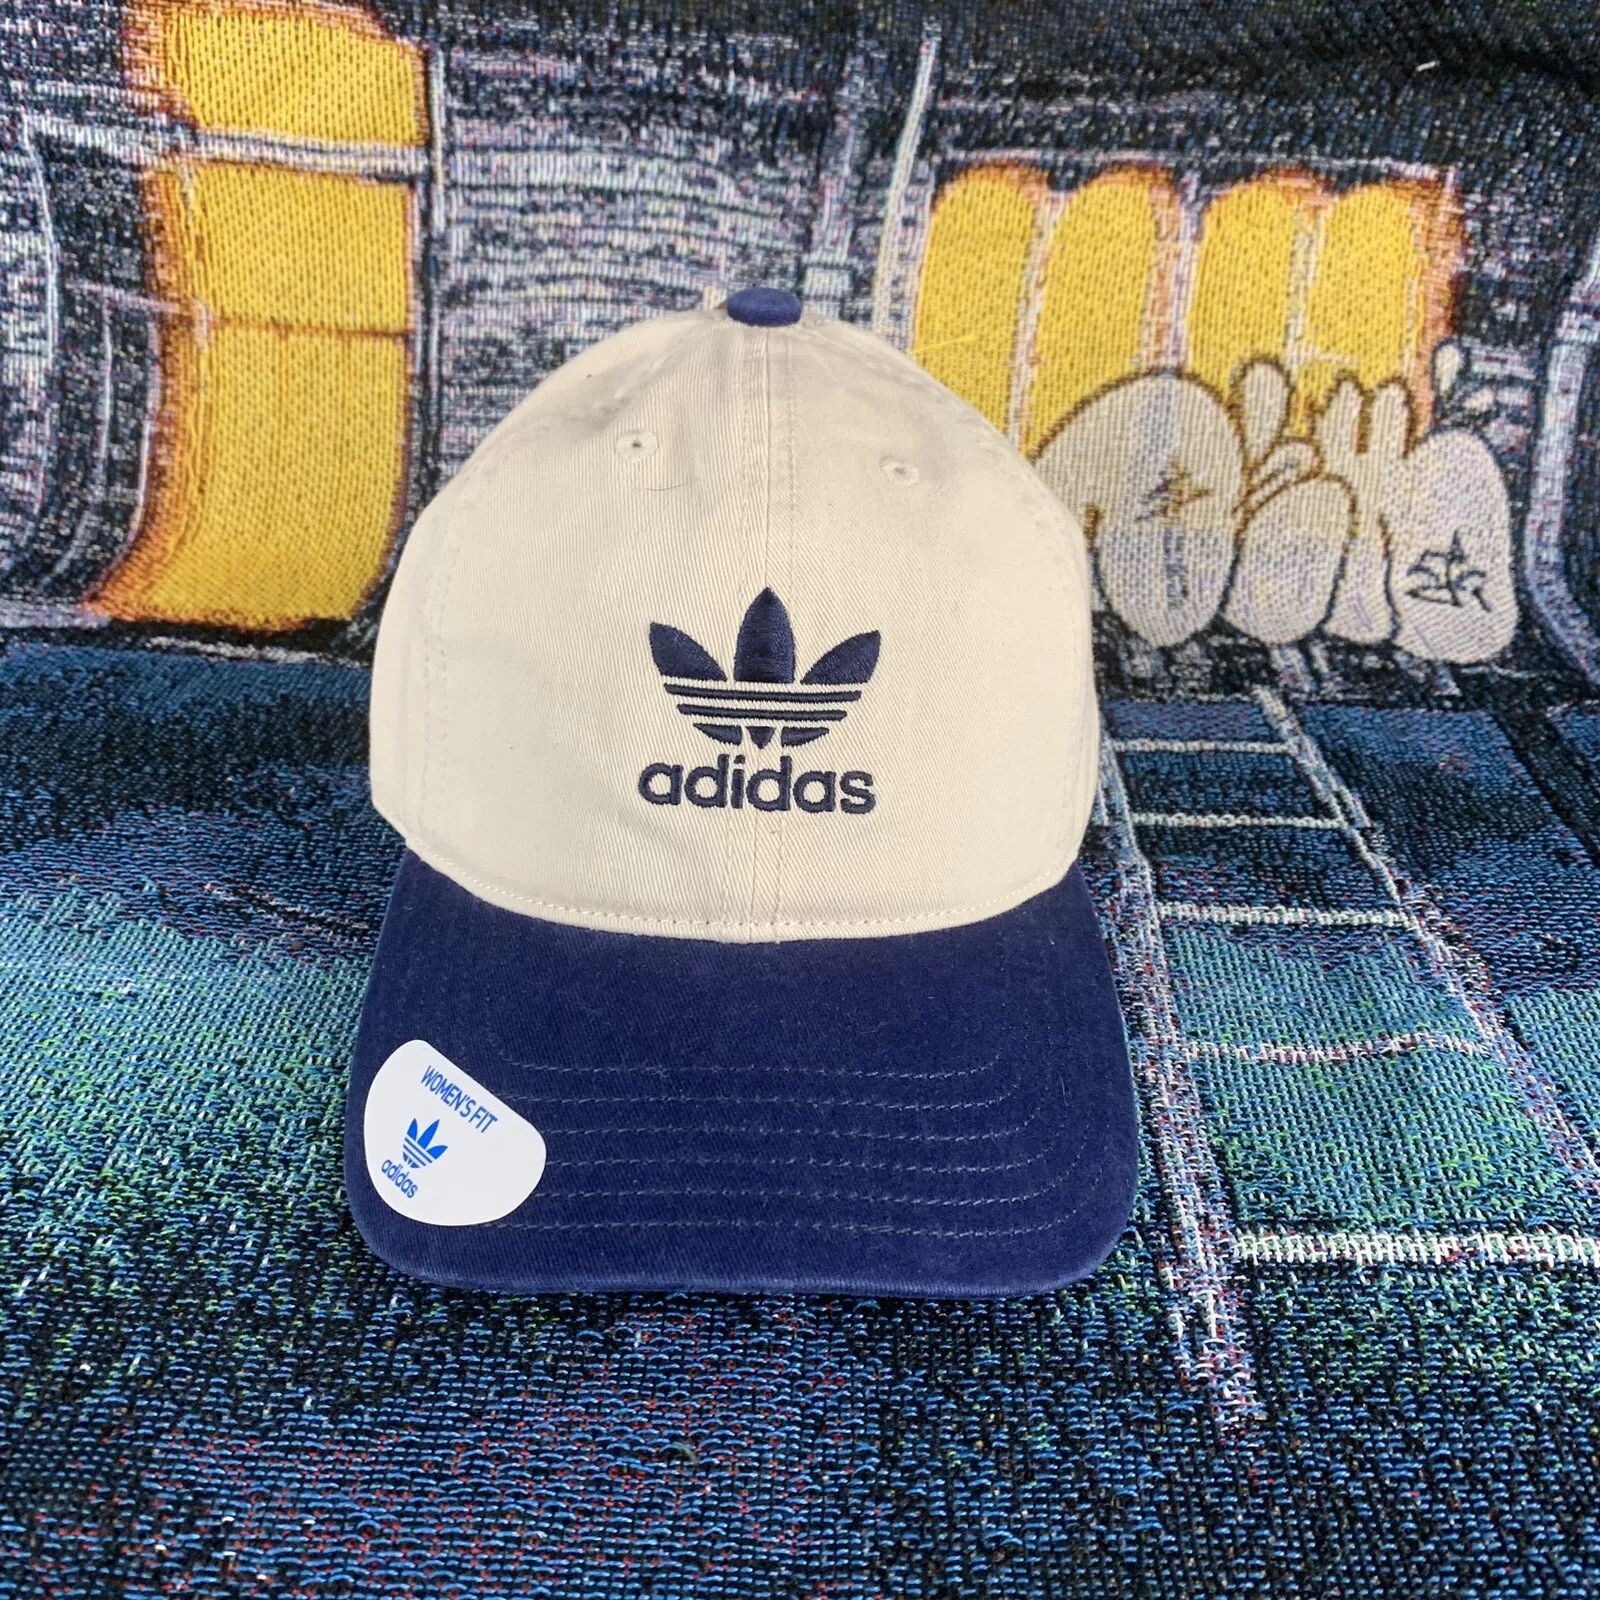 Adidas Originals Tan Navy Trefoil Logo  Baseball Cap Dad Hat College Fashion | eBay US